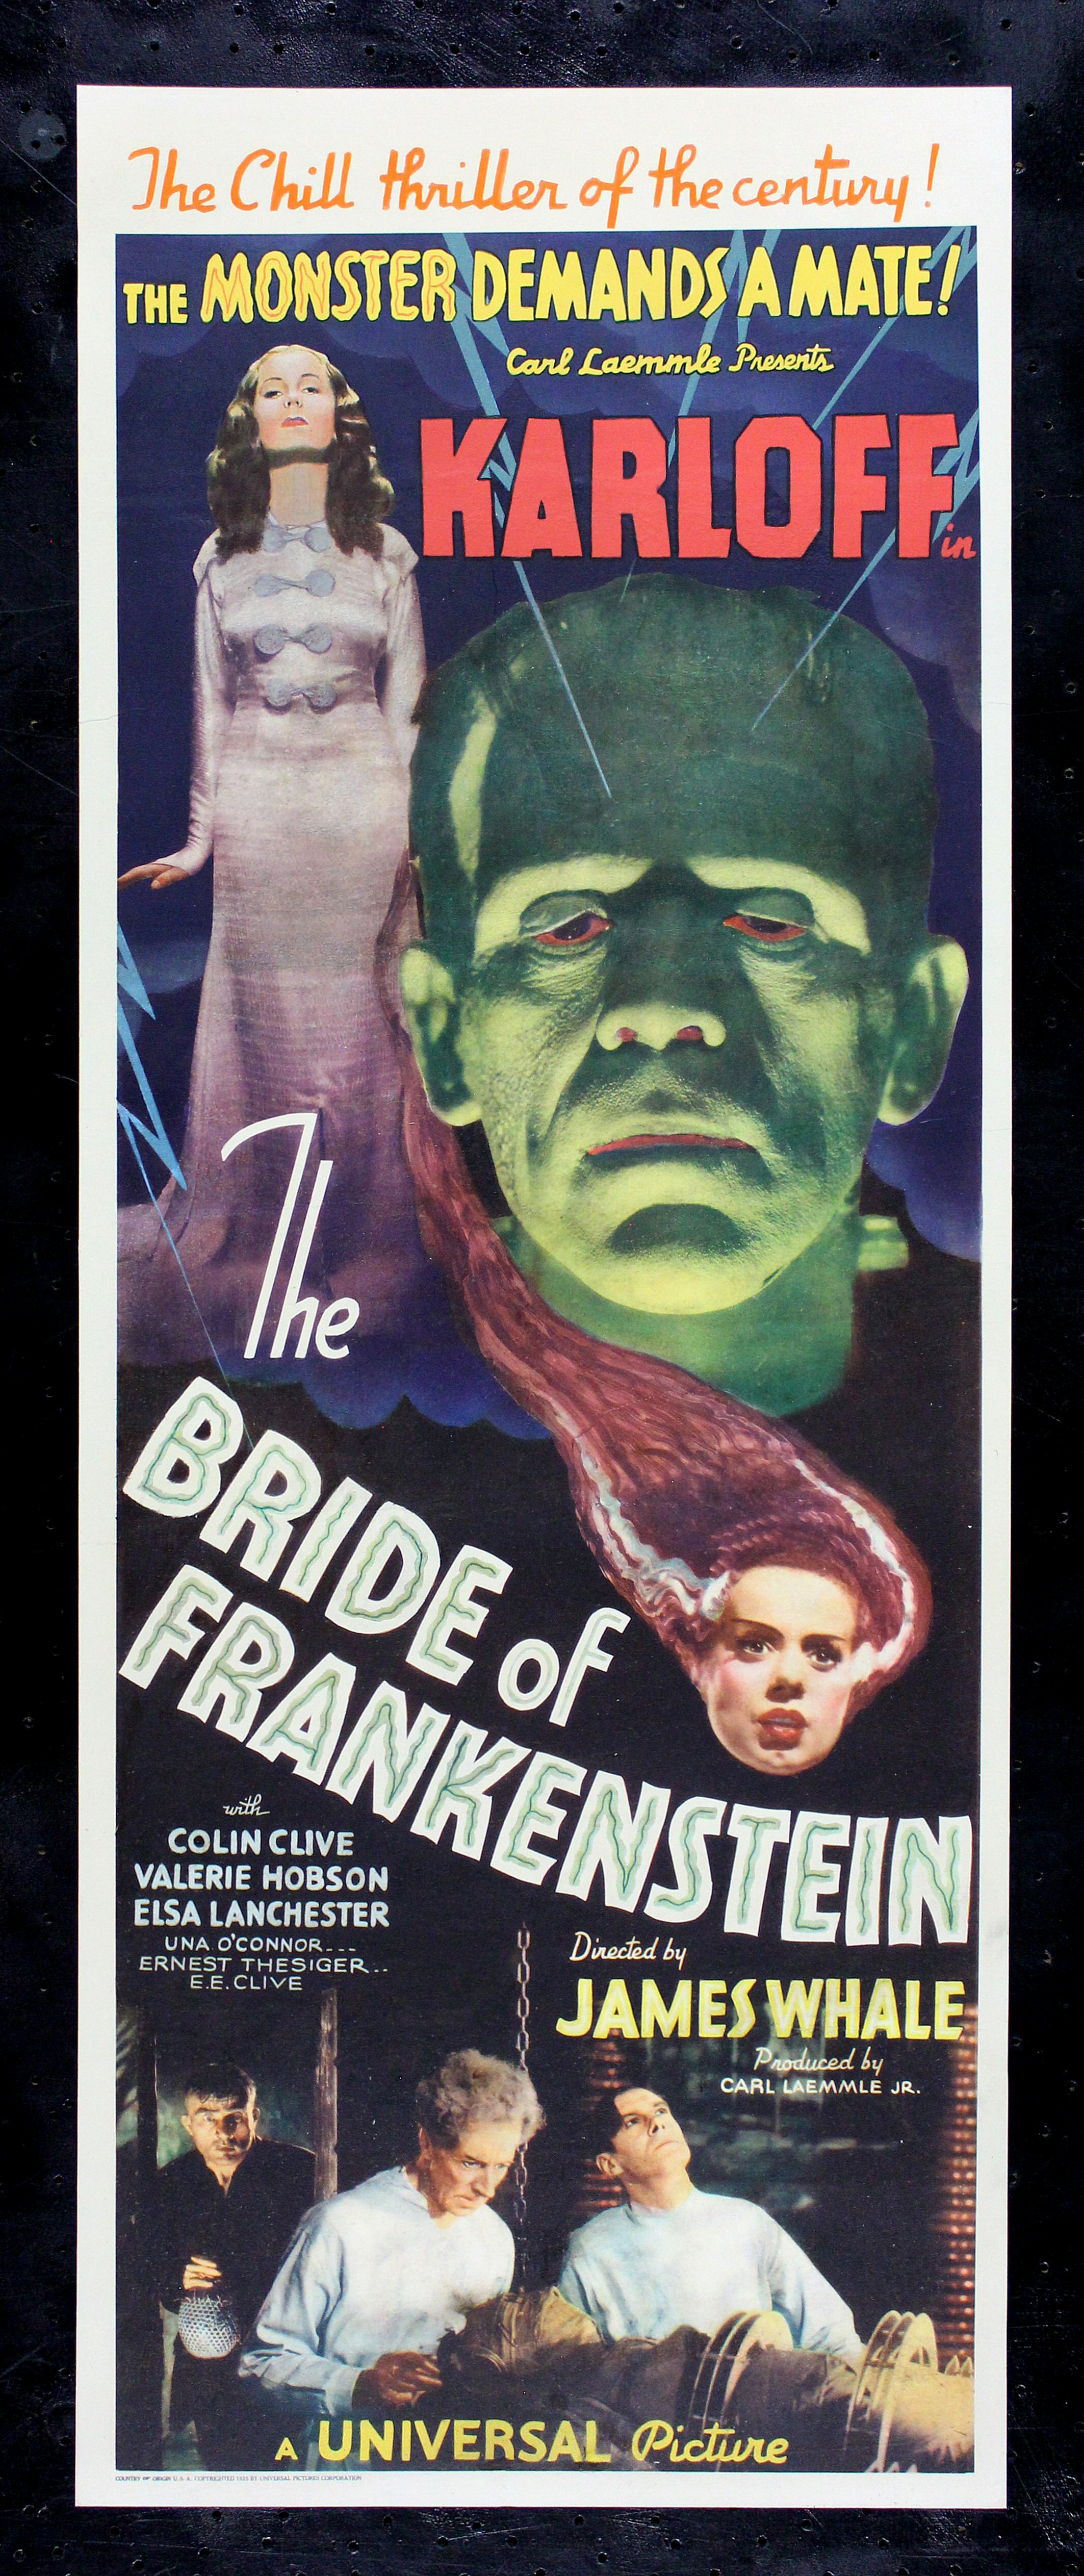 Vintage Original Hollywood Movie Posters | Movie Poster ...